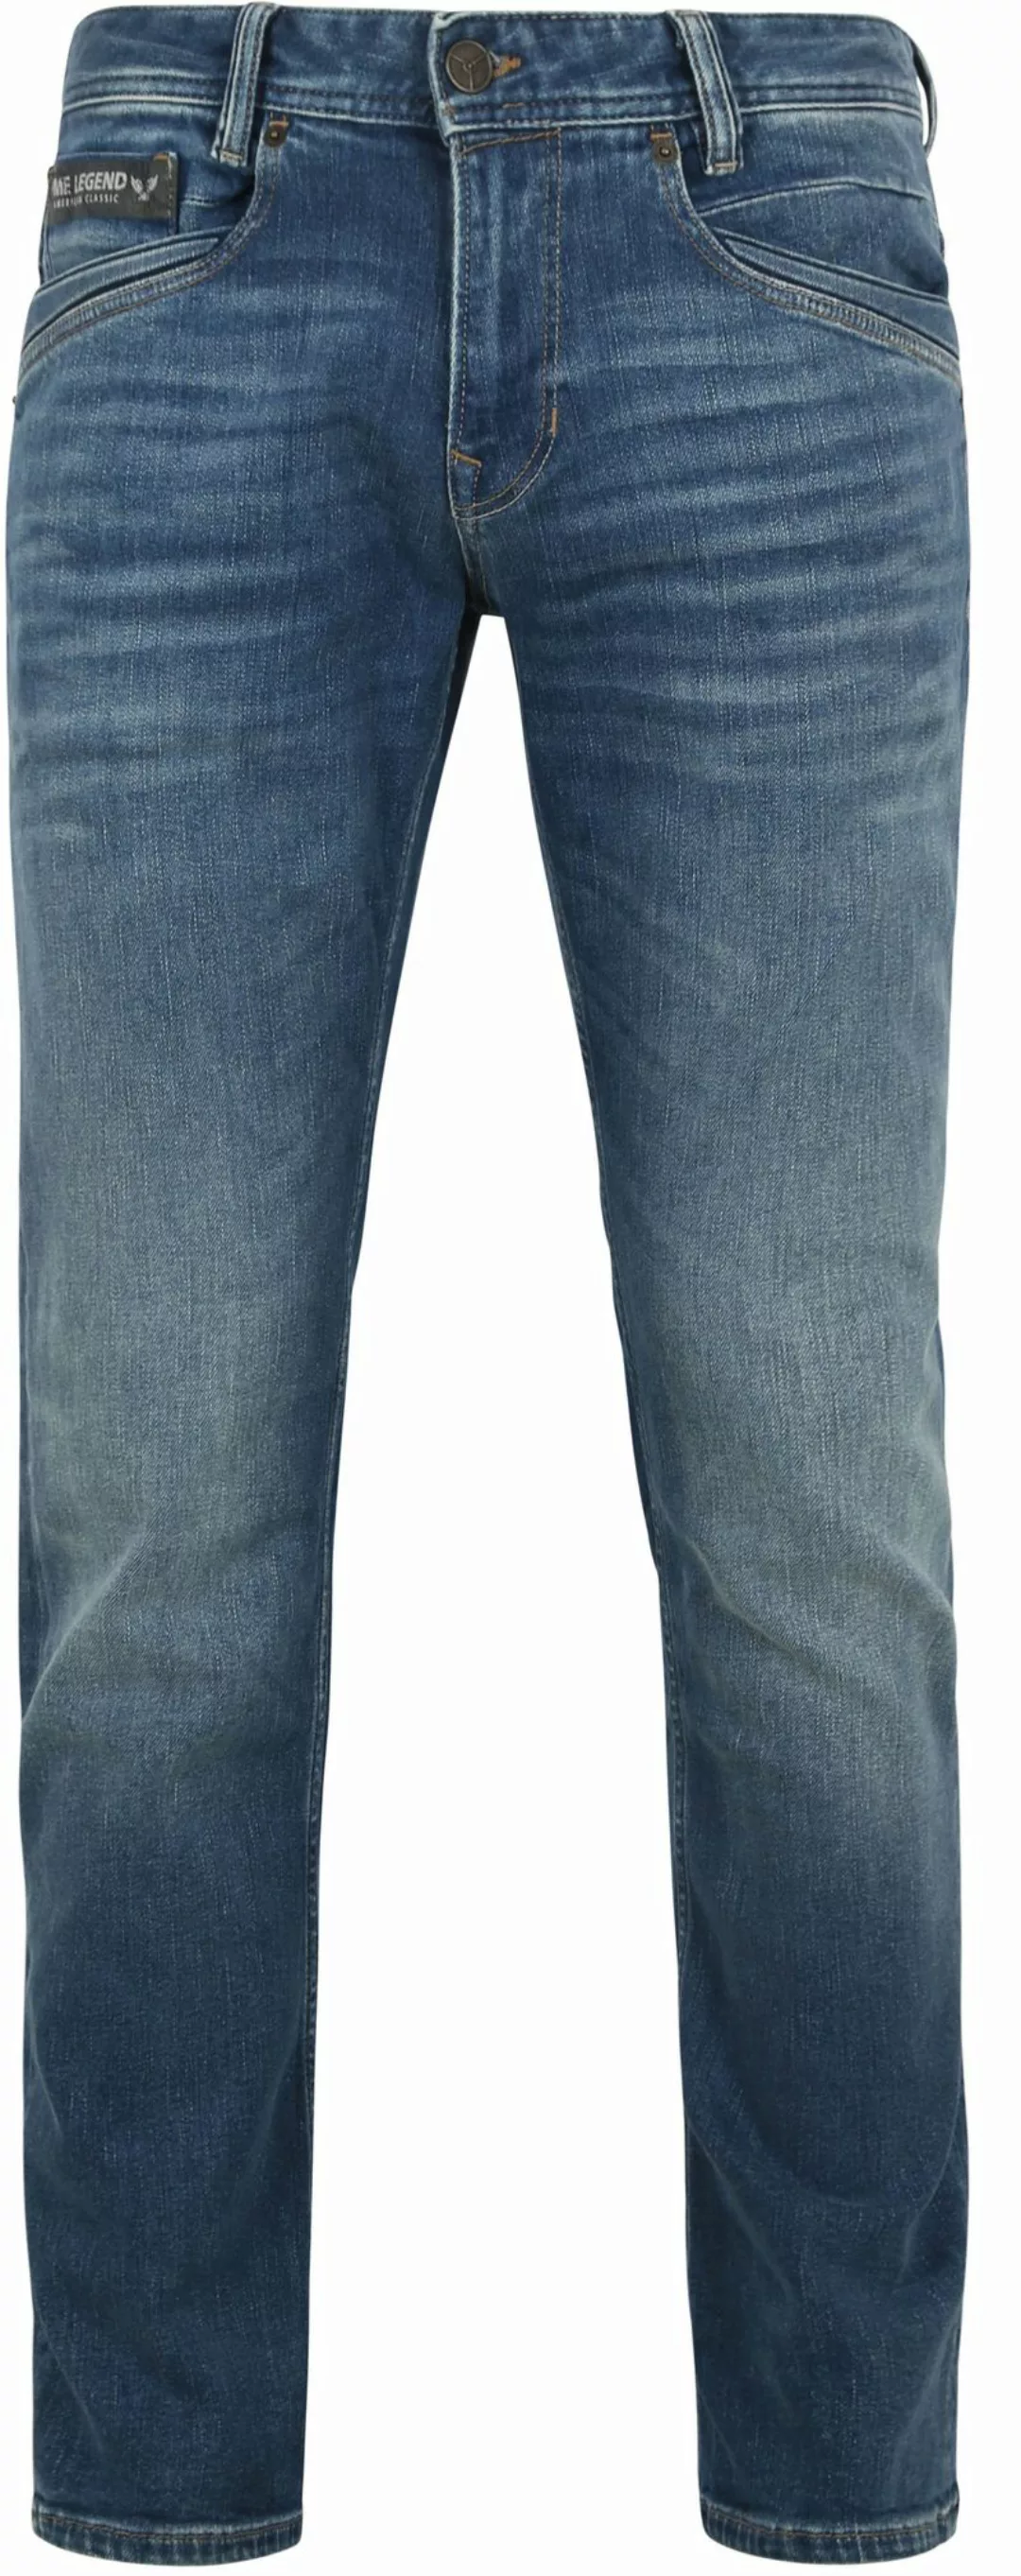 PME Legend Skyrak Jeans Blau HMB - Größe W 31 - L 32 günstig online kaufen